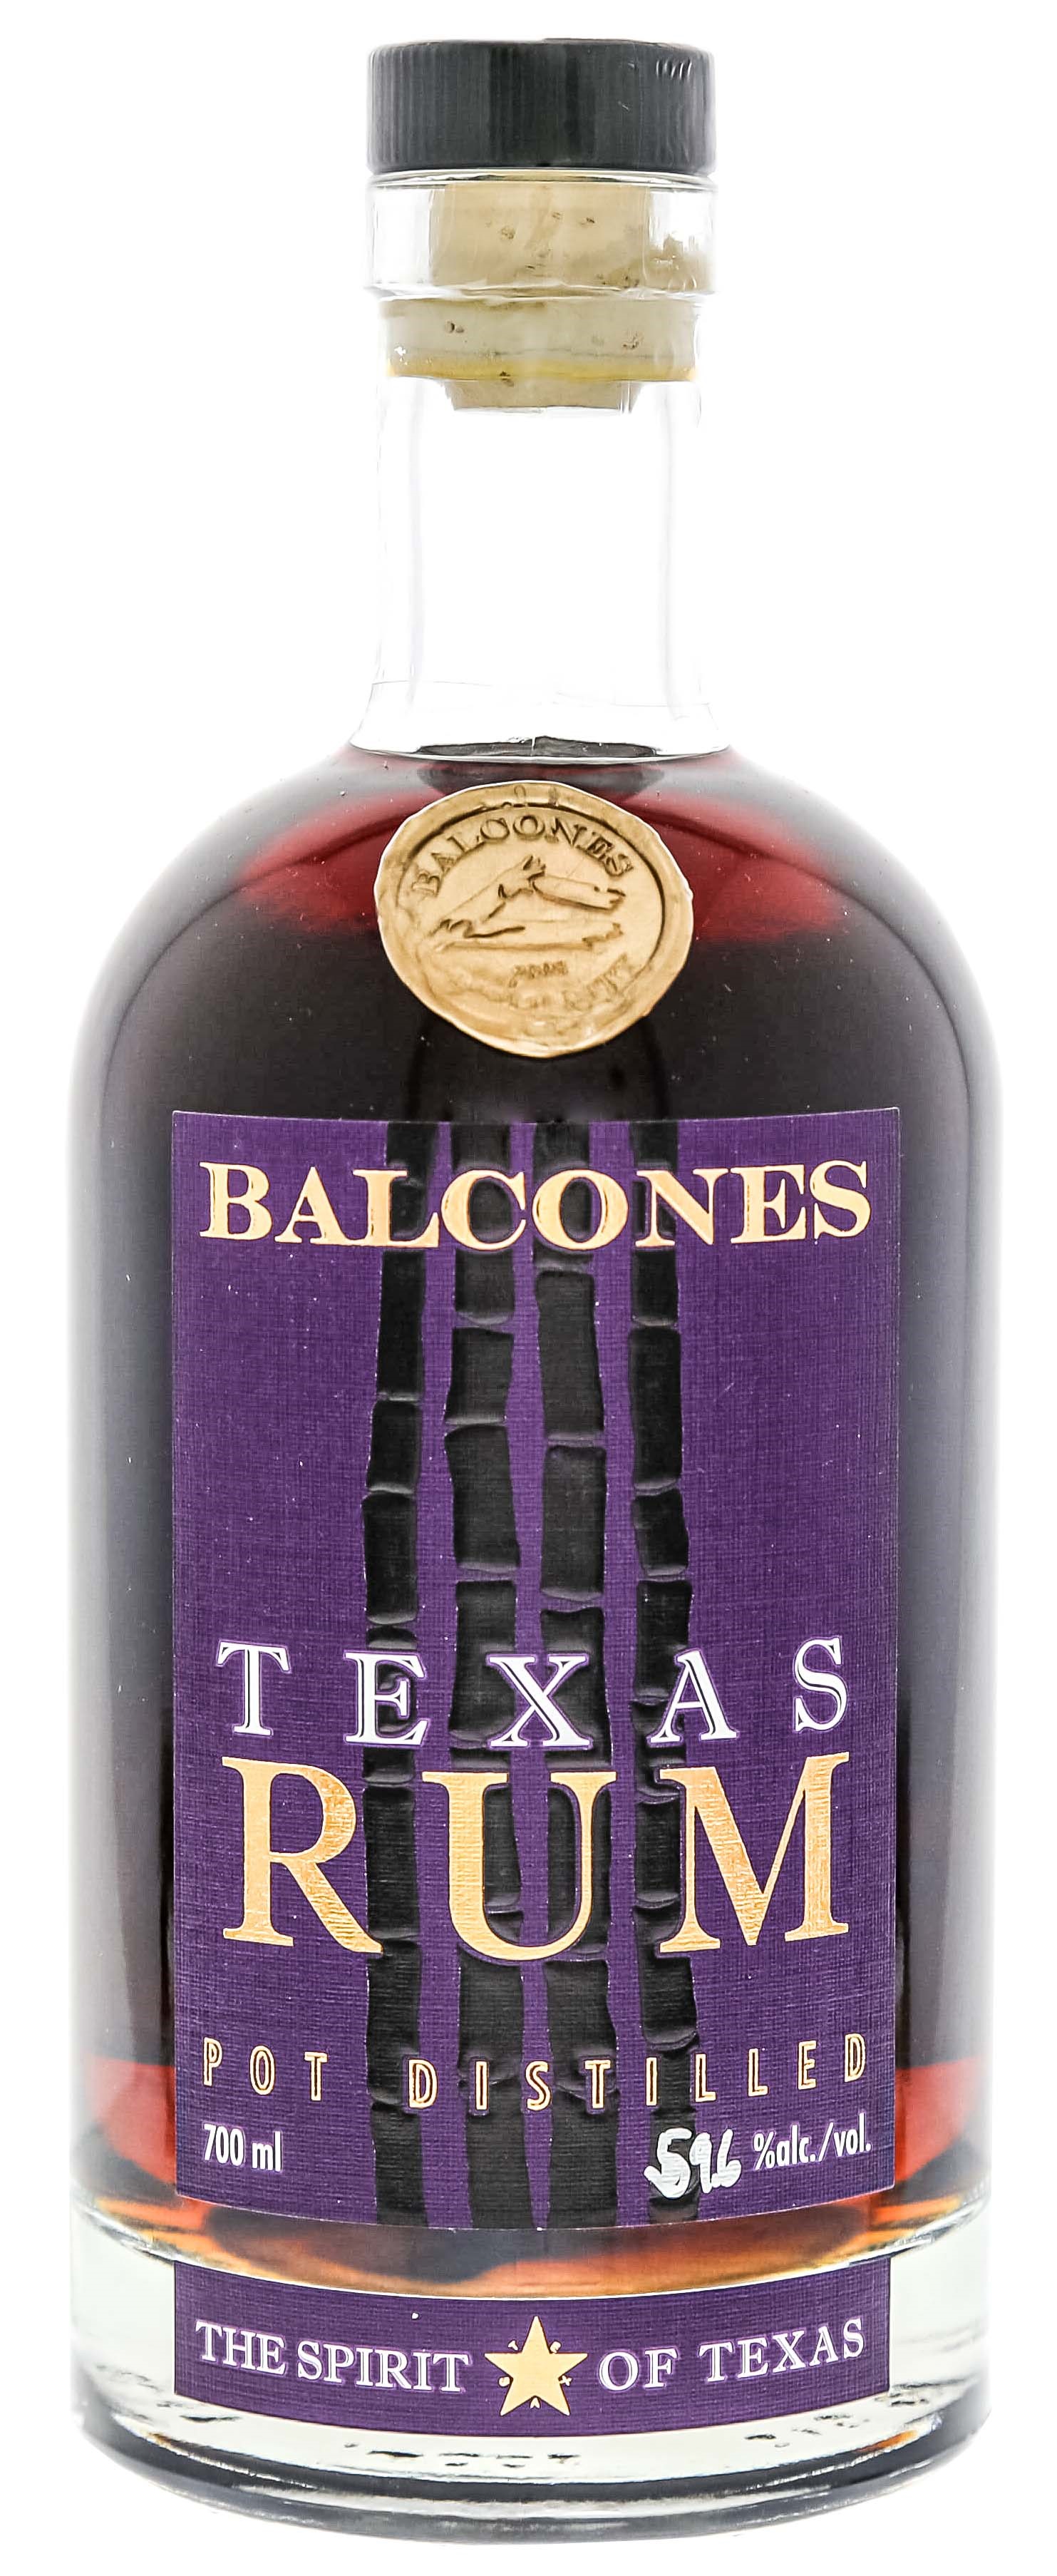 Balcones Special Release Texas Rum - Pot Distilled, 59,6% Alc.Vol., Distillery Original Bottling